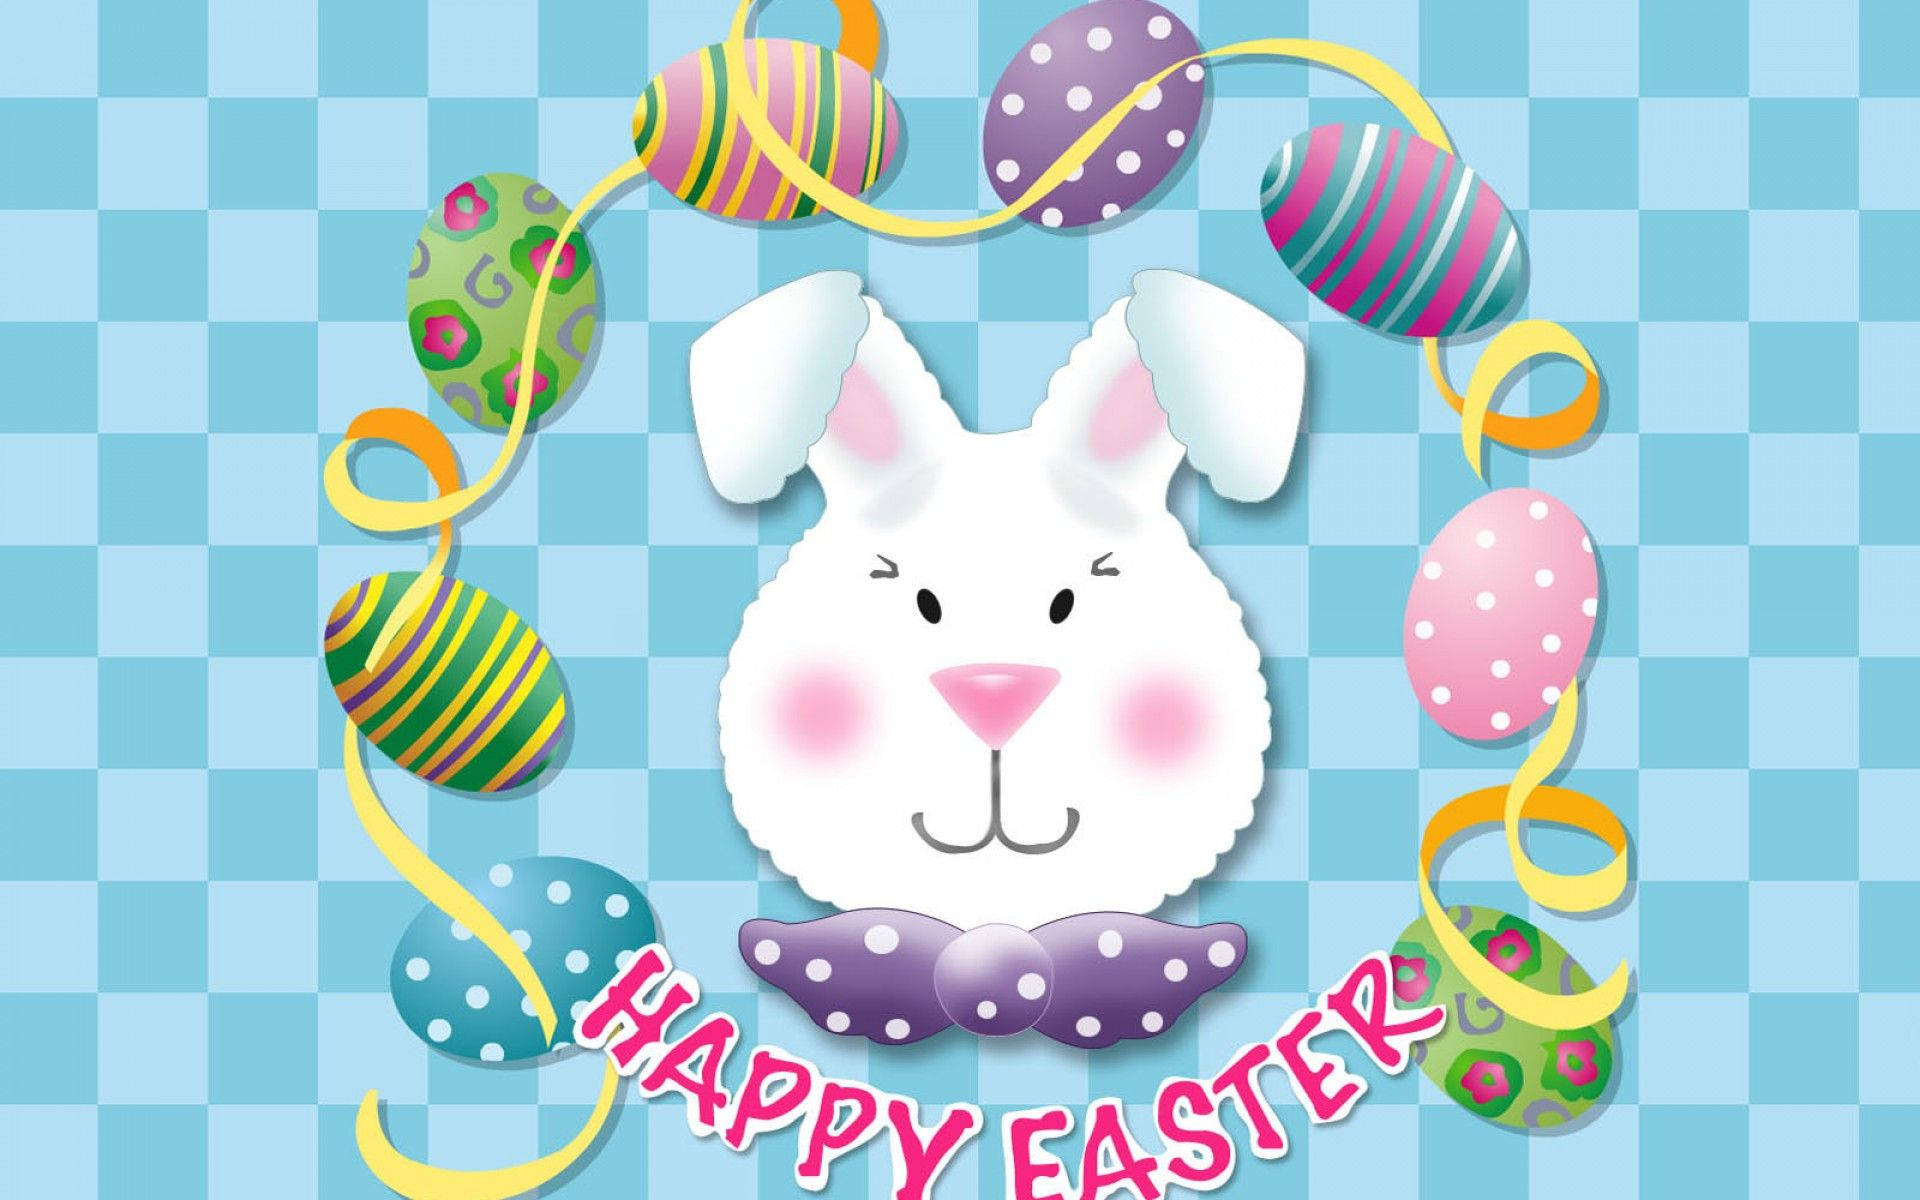 Charming Mr. Happy Easter Bunny Cartoon